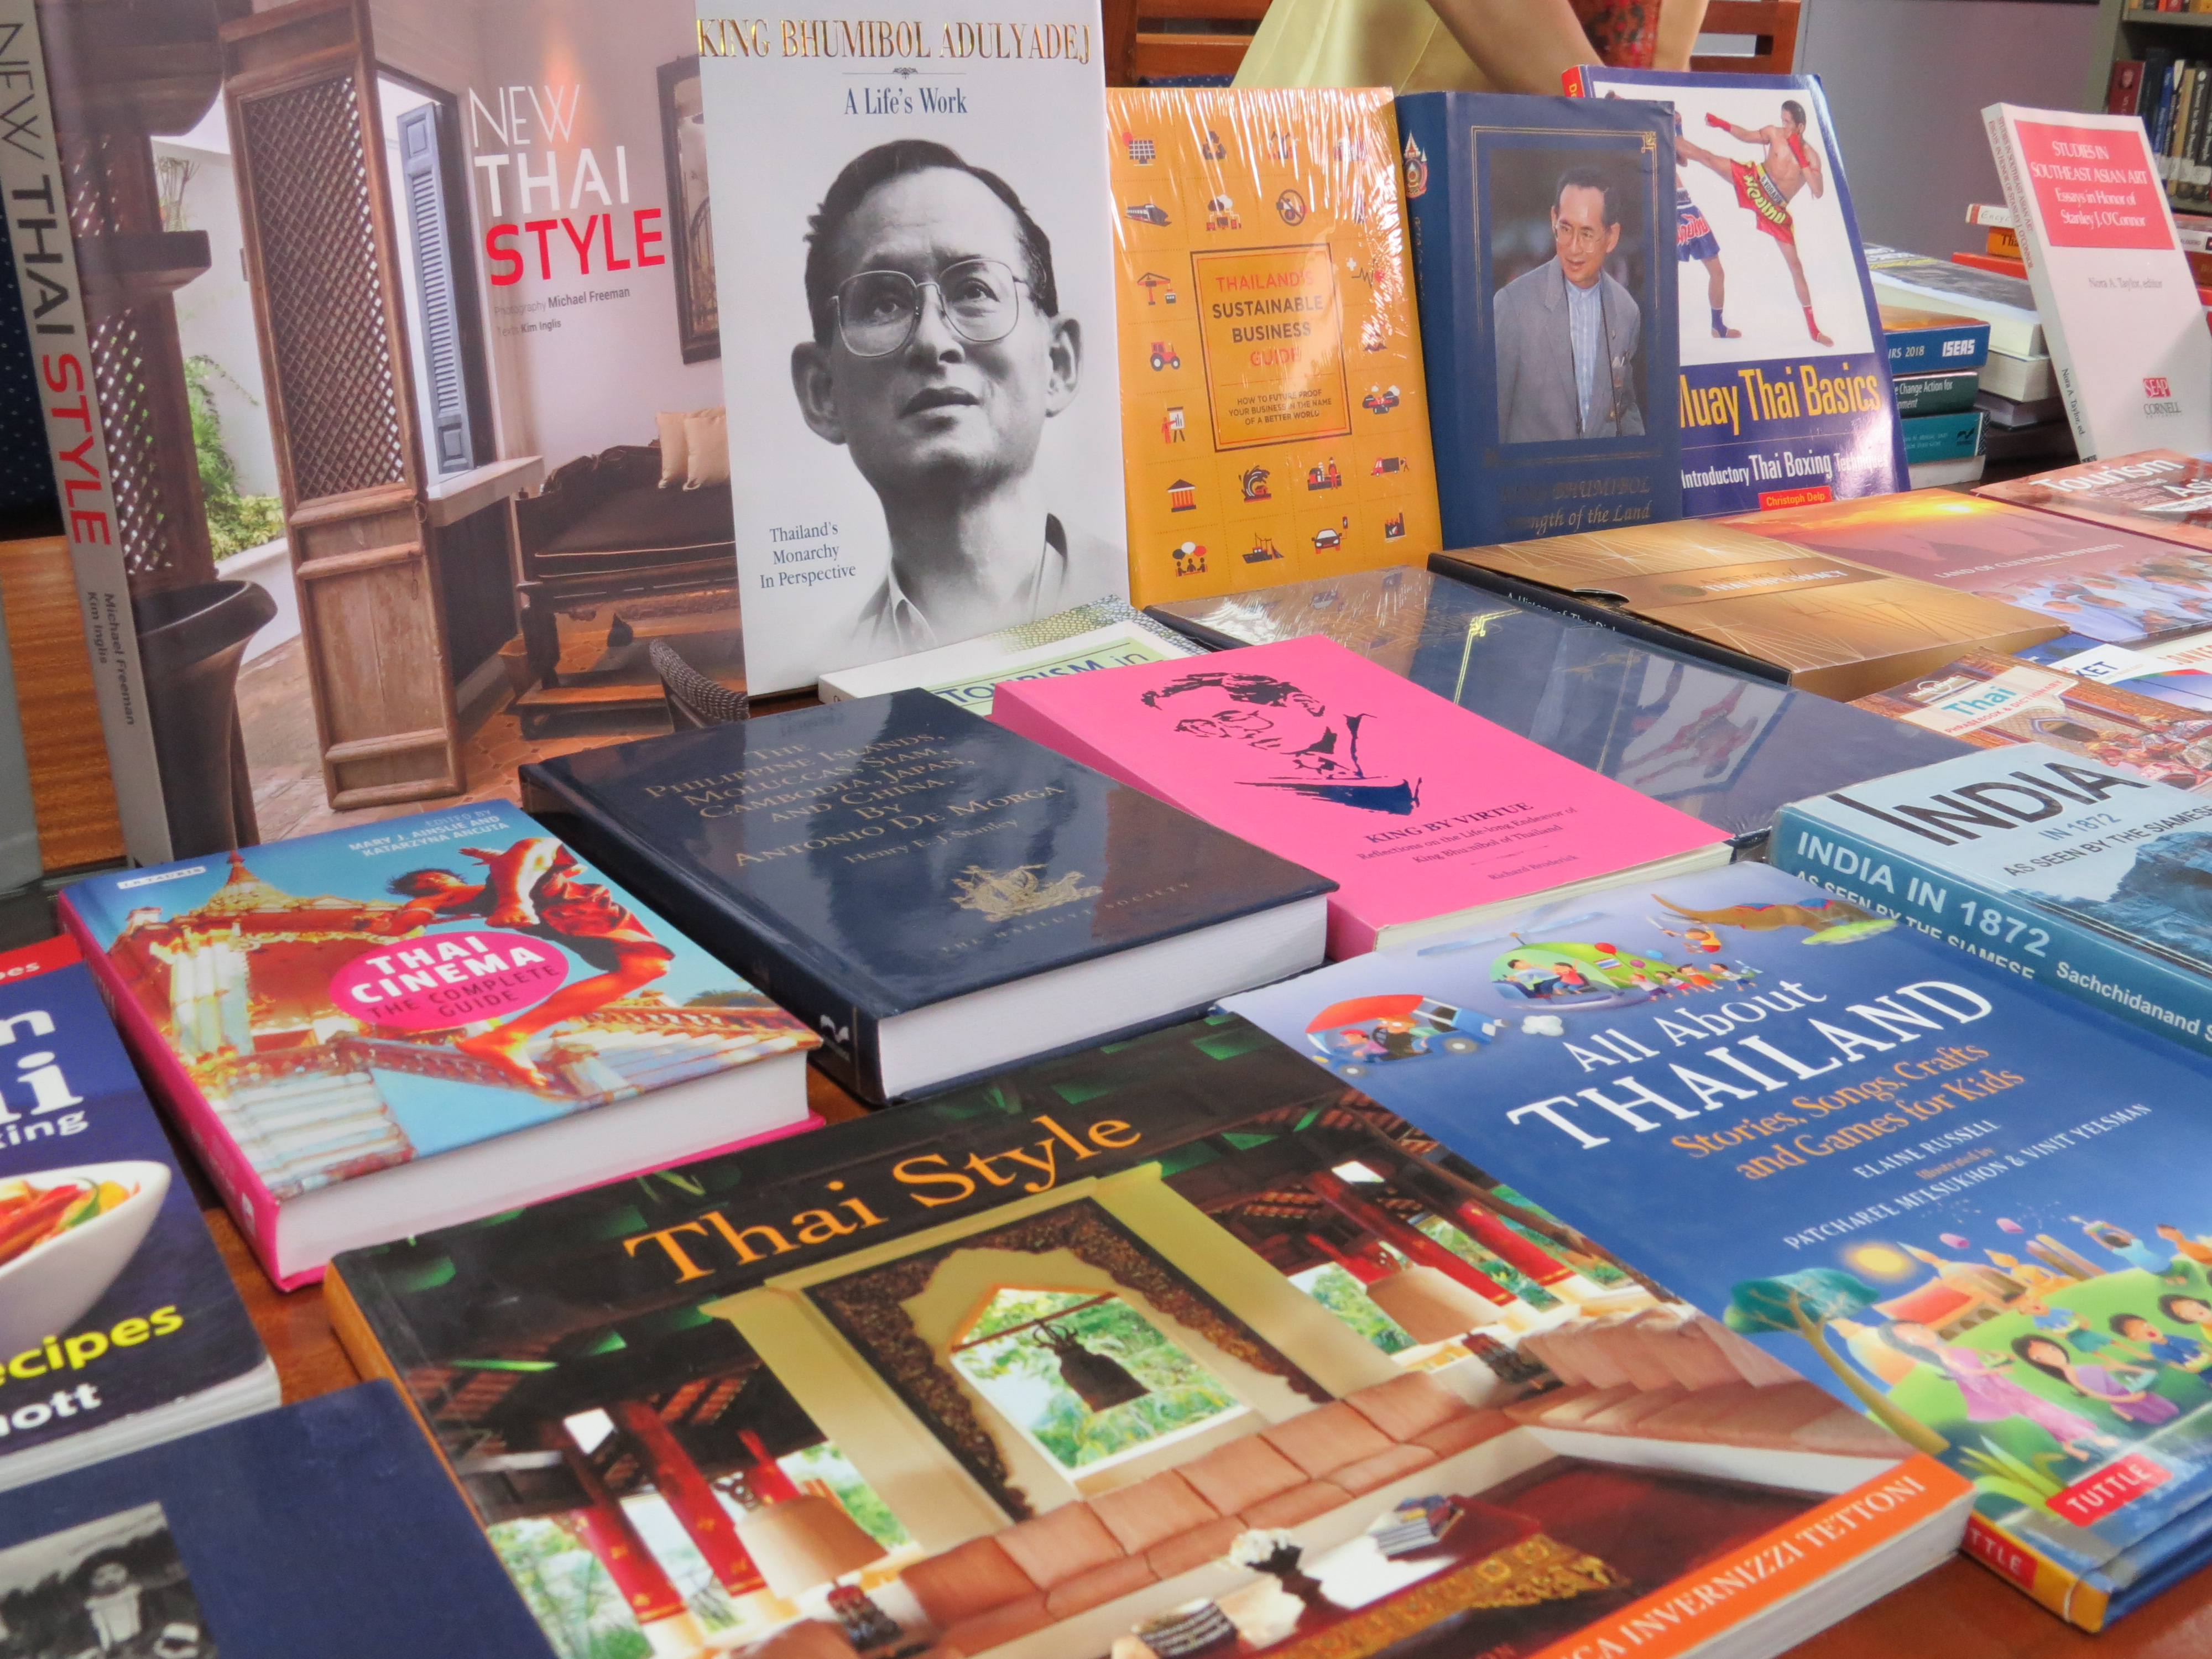 Royal Thai Consulate-General, Kolkata, donated books about foreign affairs to Thai Corner, University of Calcutta